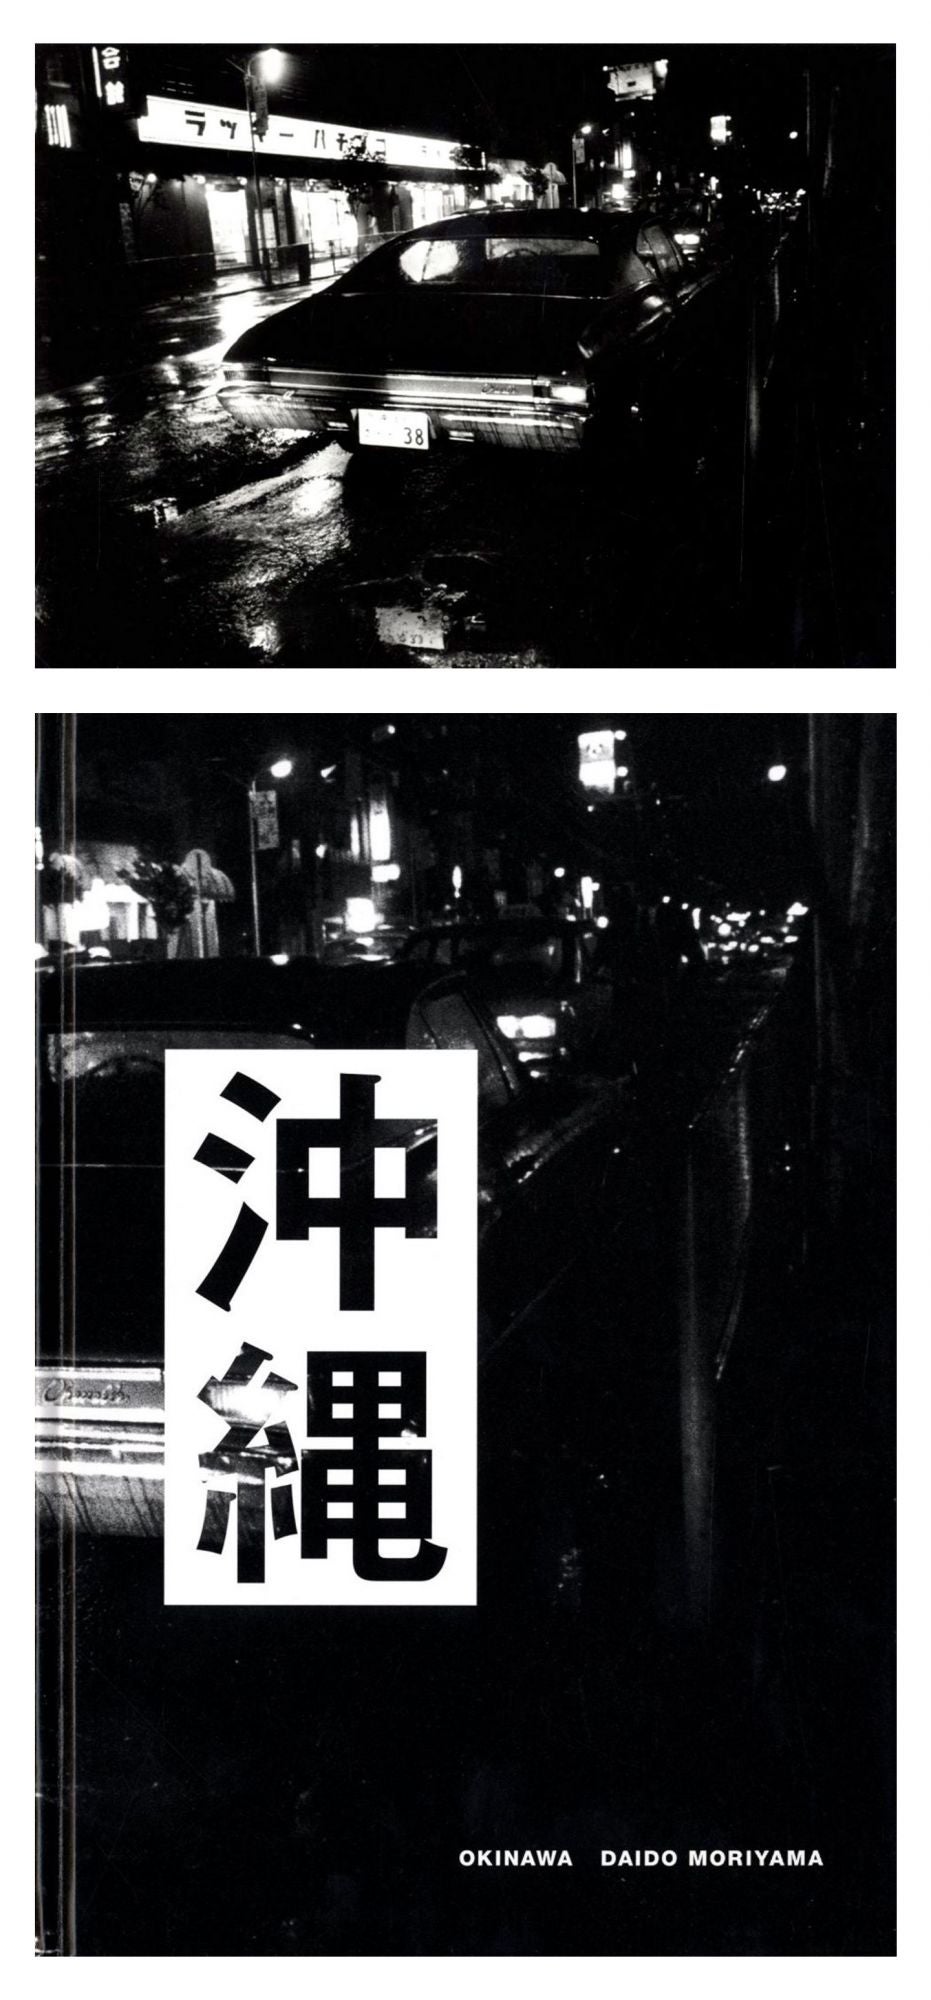 Daido Moriyama: Okinawa (Super Labo), Limited Edition (with Gelatin Silver Print, "Chevelle" Variant) [SIGNED]